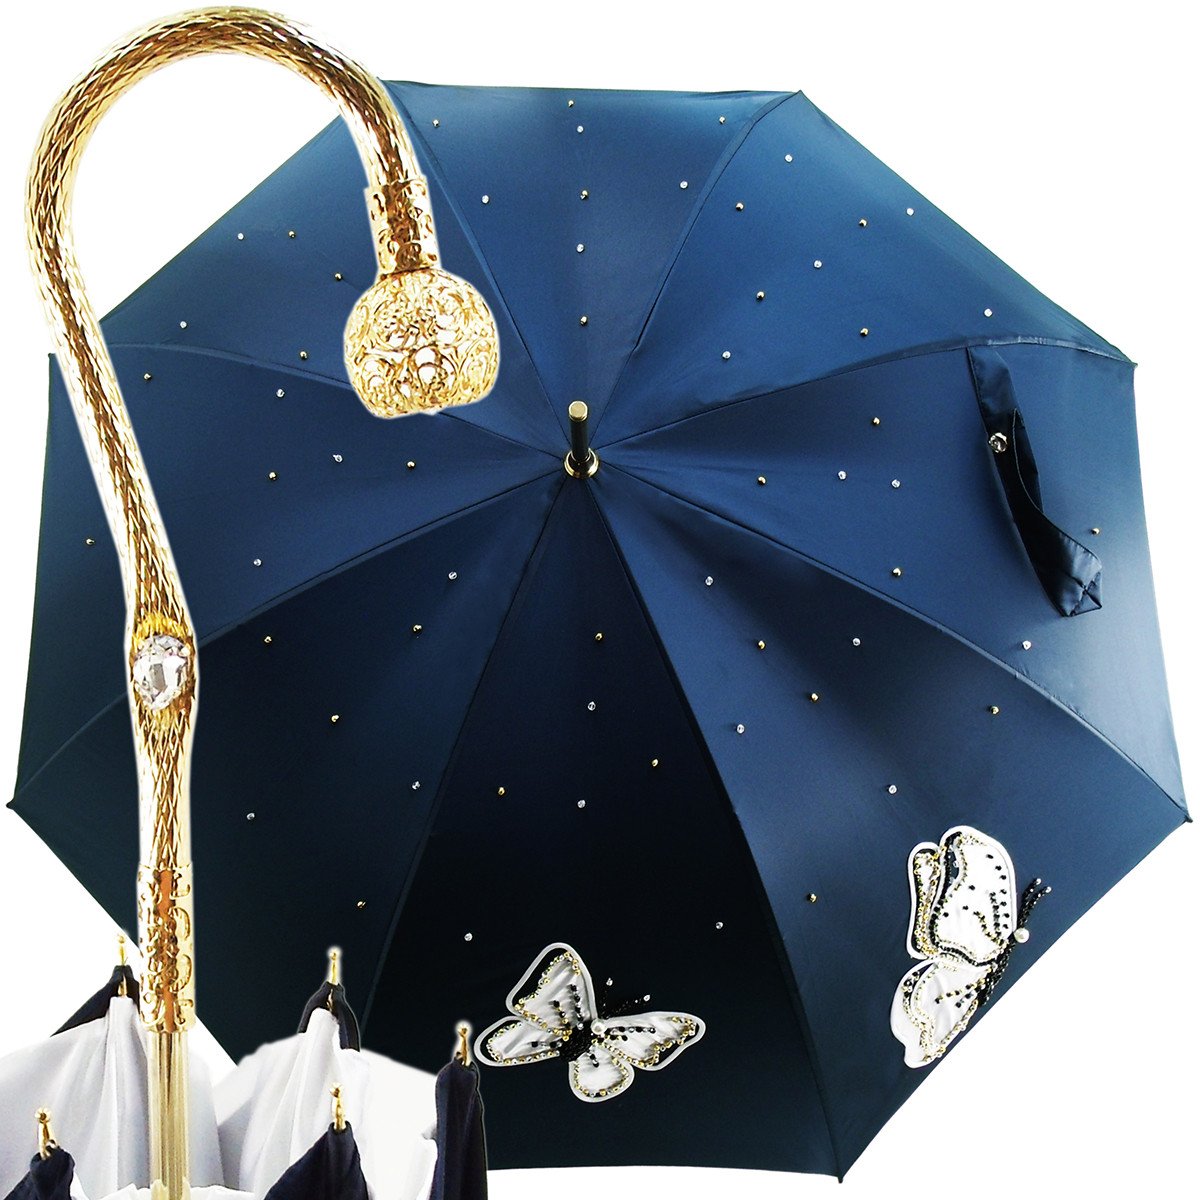 Fantastic Women's Umbrella with Embroidered Butterflies - il-marchesato